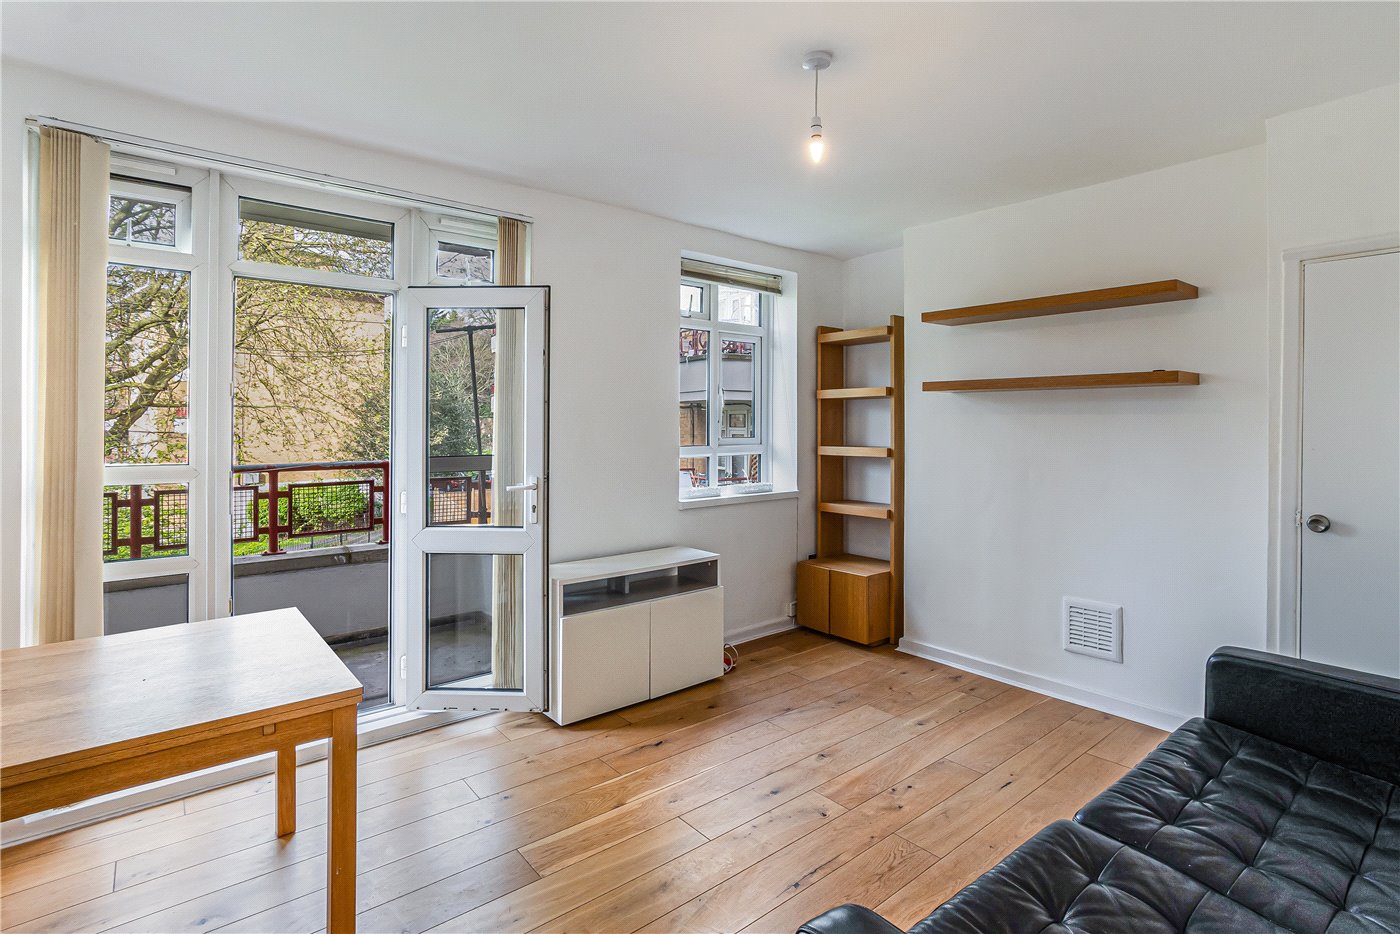 Champion Hill Estate, Camberwell, London, SE5 3 bedroom flat/apartment